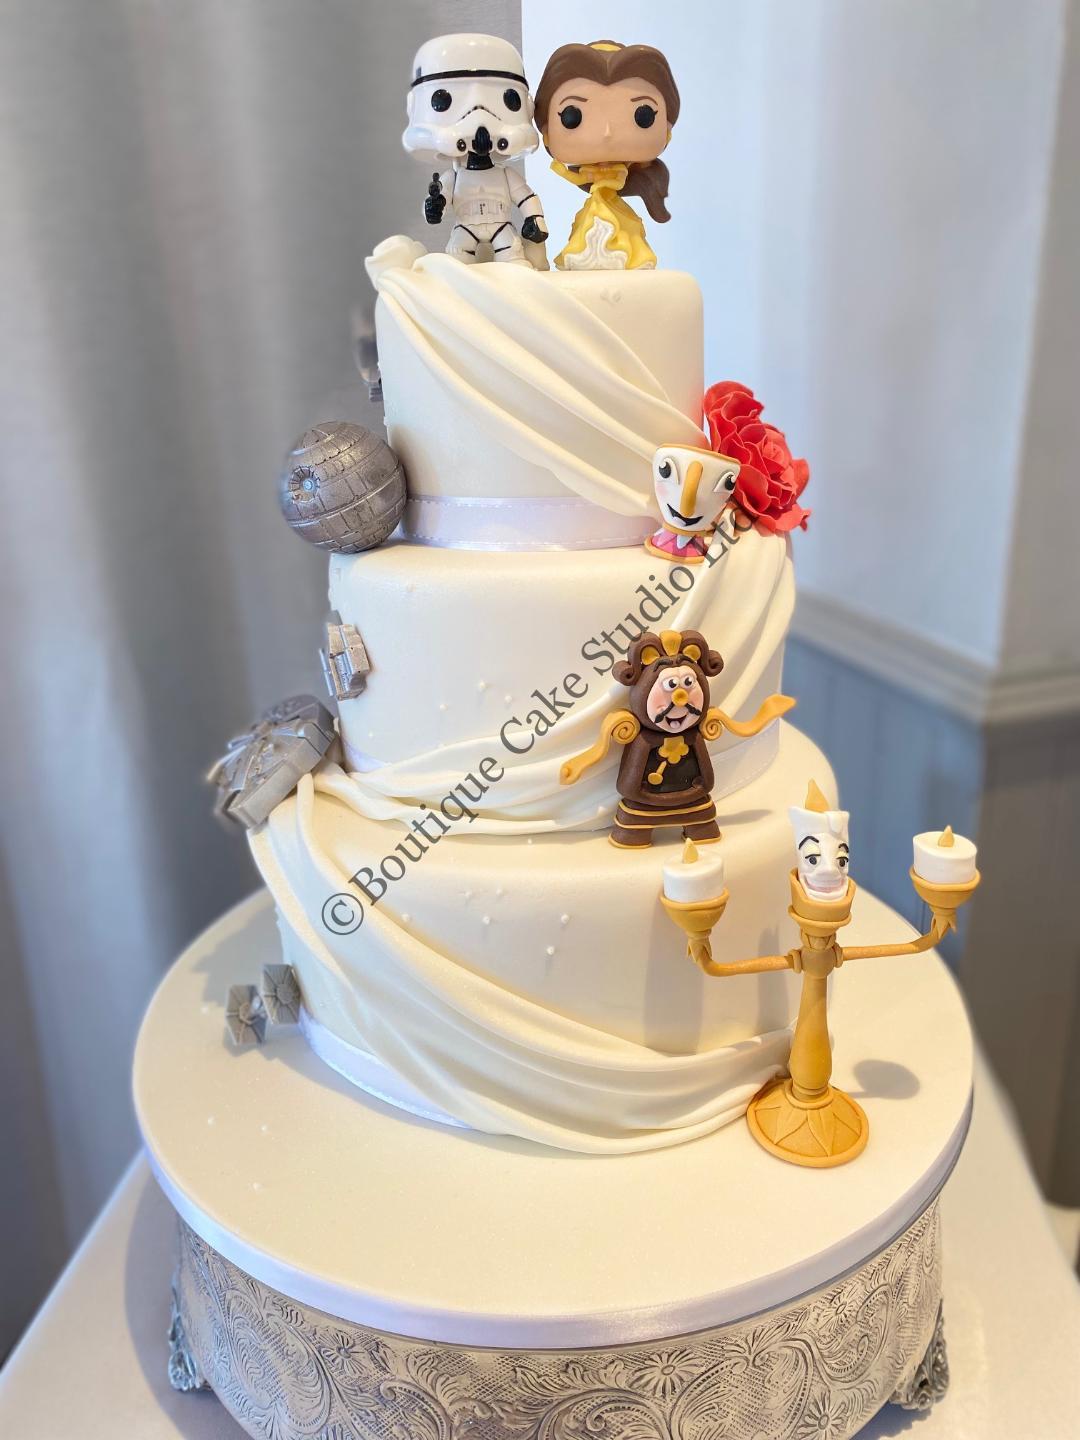 Star Wars & Beauty & The Beast themed Cake